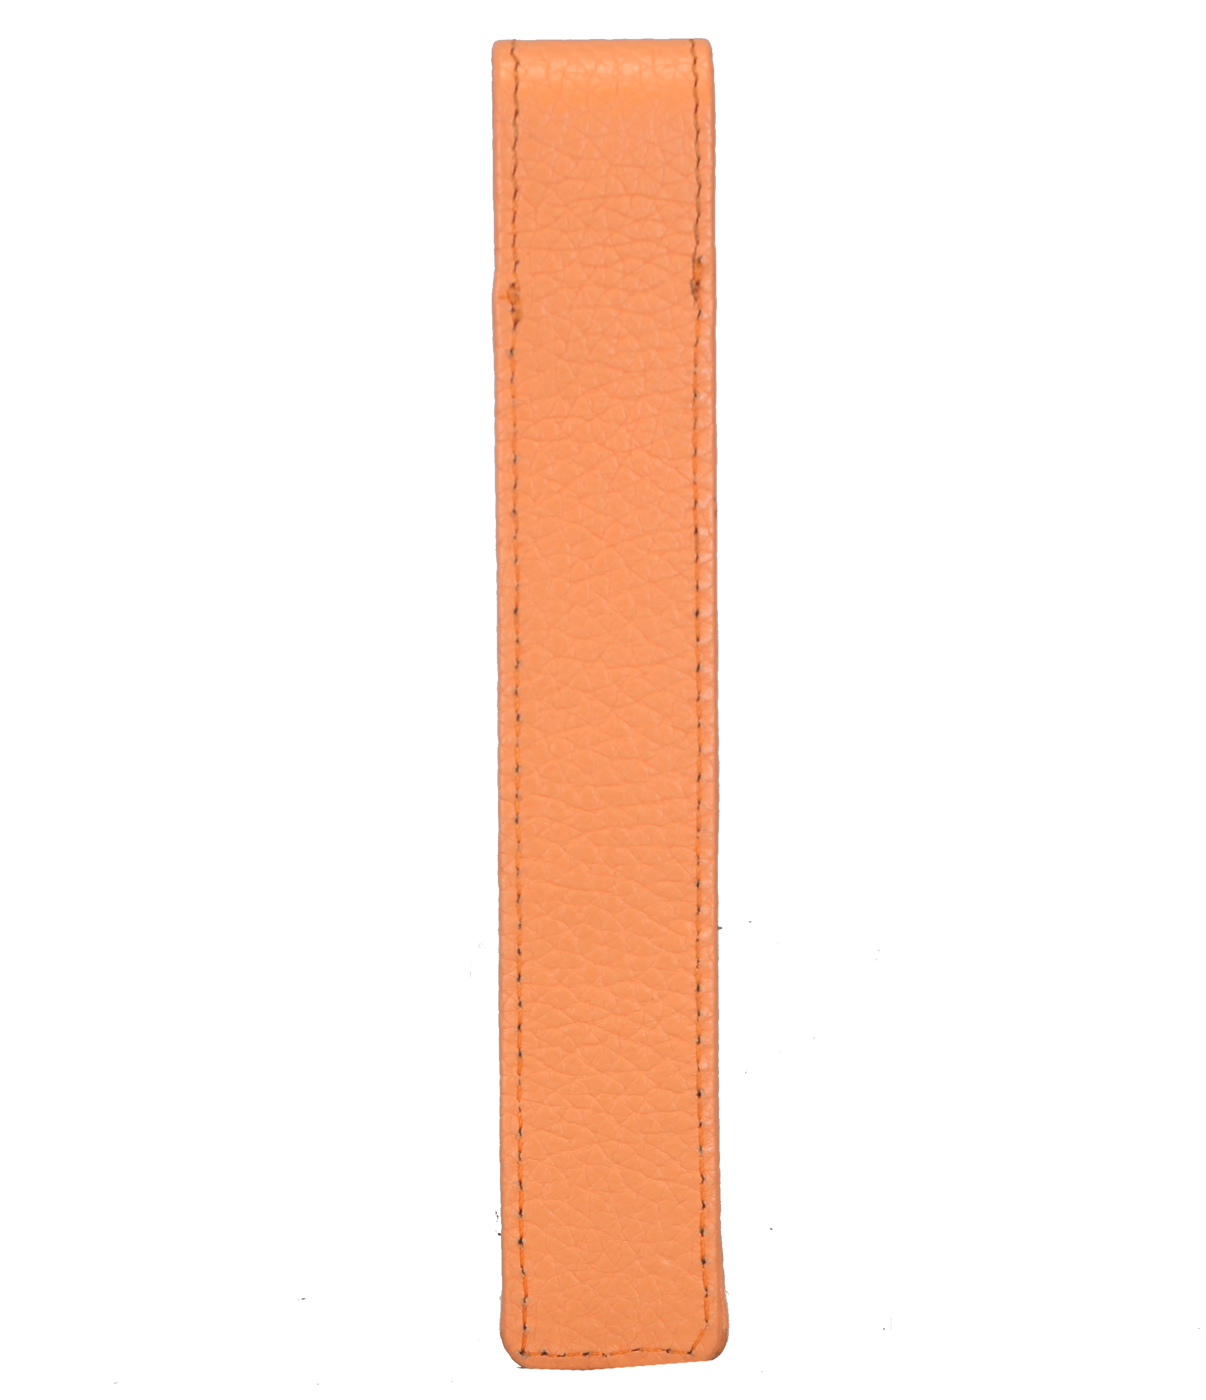 Pen Case--Pen case to carry single pen in Genuine Leather - Peach